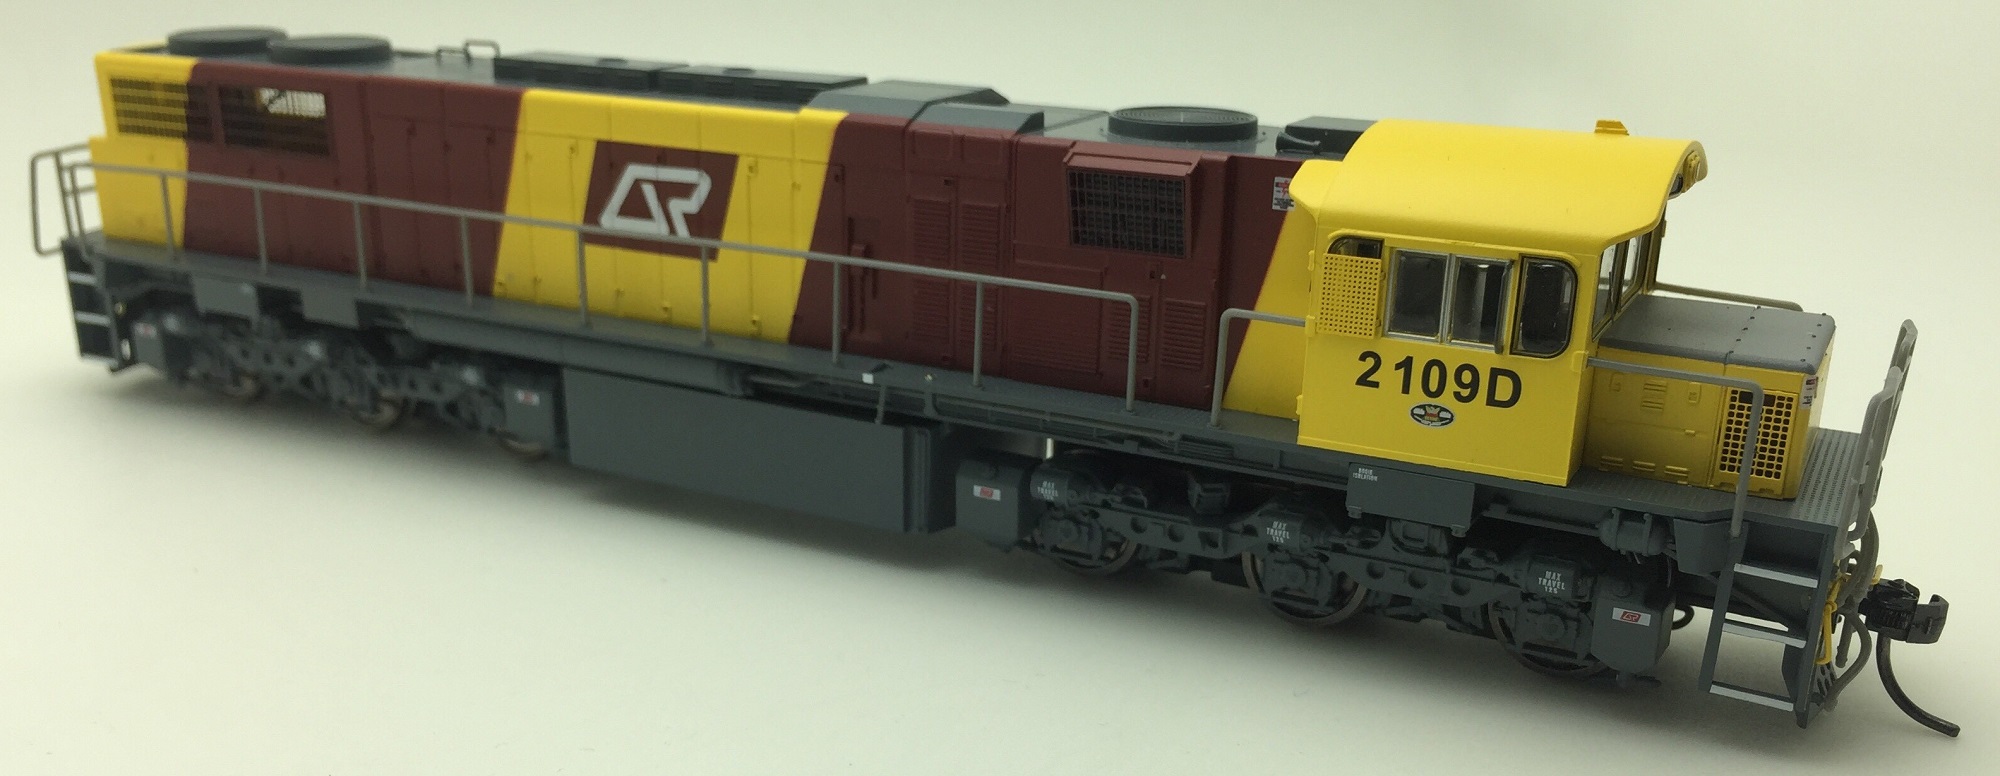 RTR065 2100 Class Locomotive #2109D HOn3½